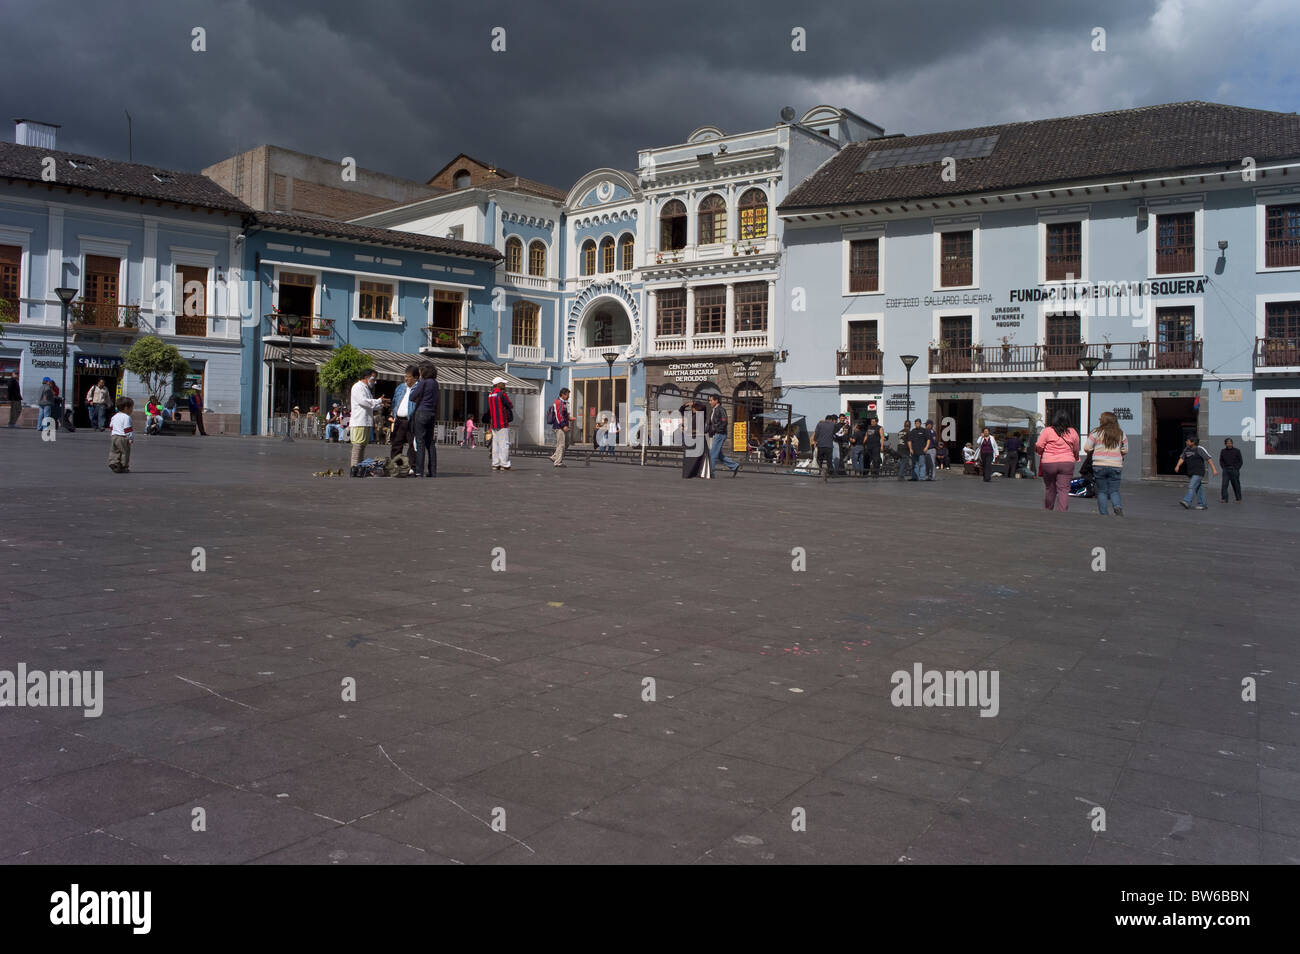 Plaza del Teatro, Quito, Ecuador Stock Photo